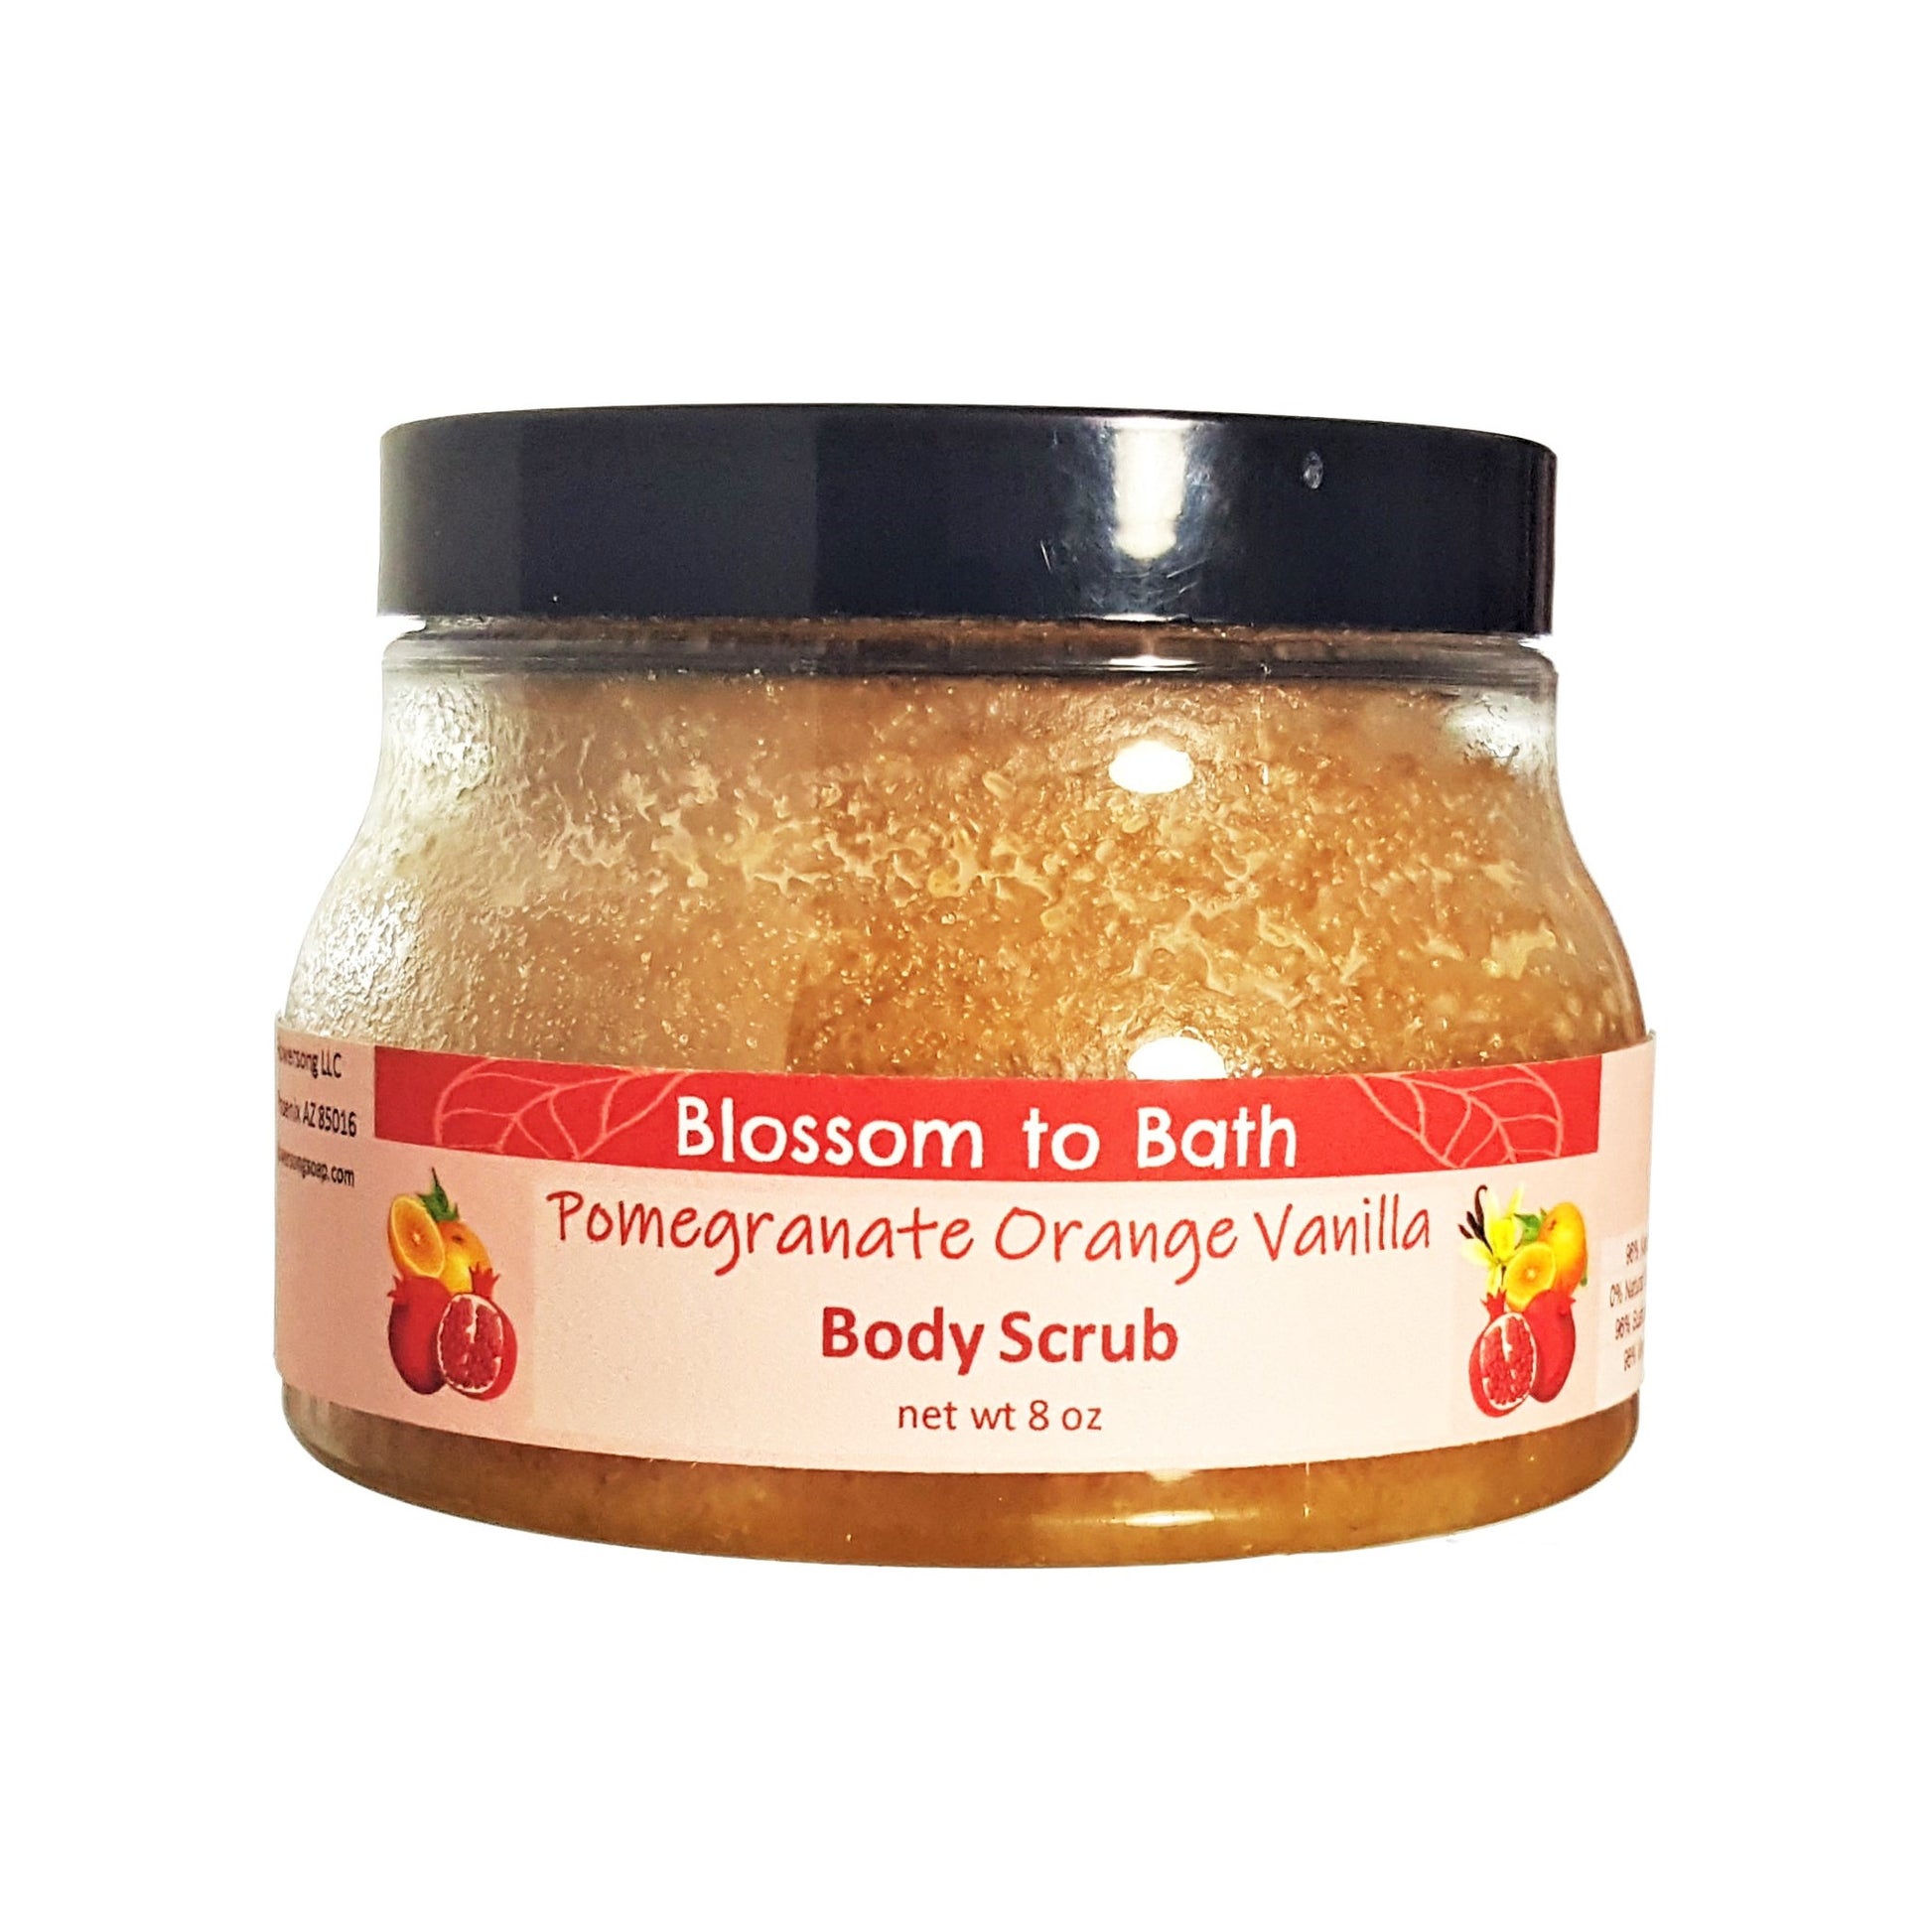 Buy Blossom to Bath Pomegranate Orange Vanilla Body Scrub from Flowersong Soap Studio.  Large crystal turbinado sugar plus luxury rich oils conveniently exfoliate and moisturize in one step  